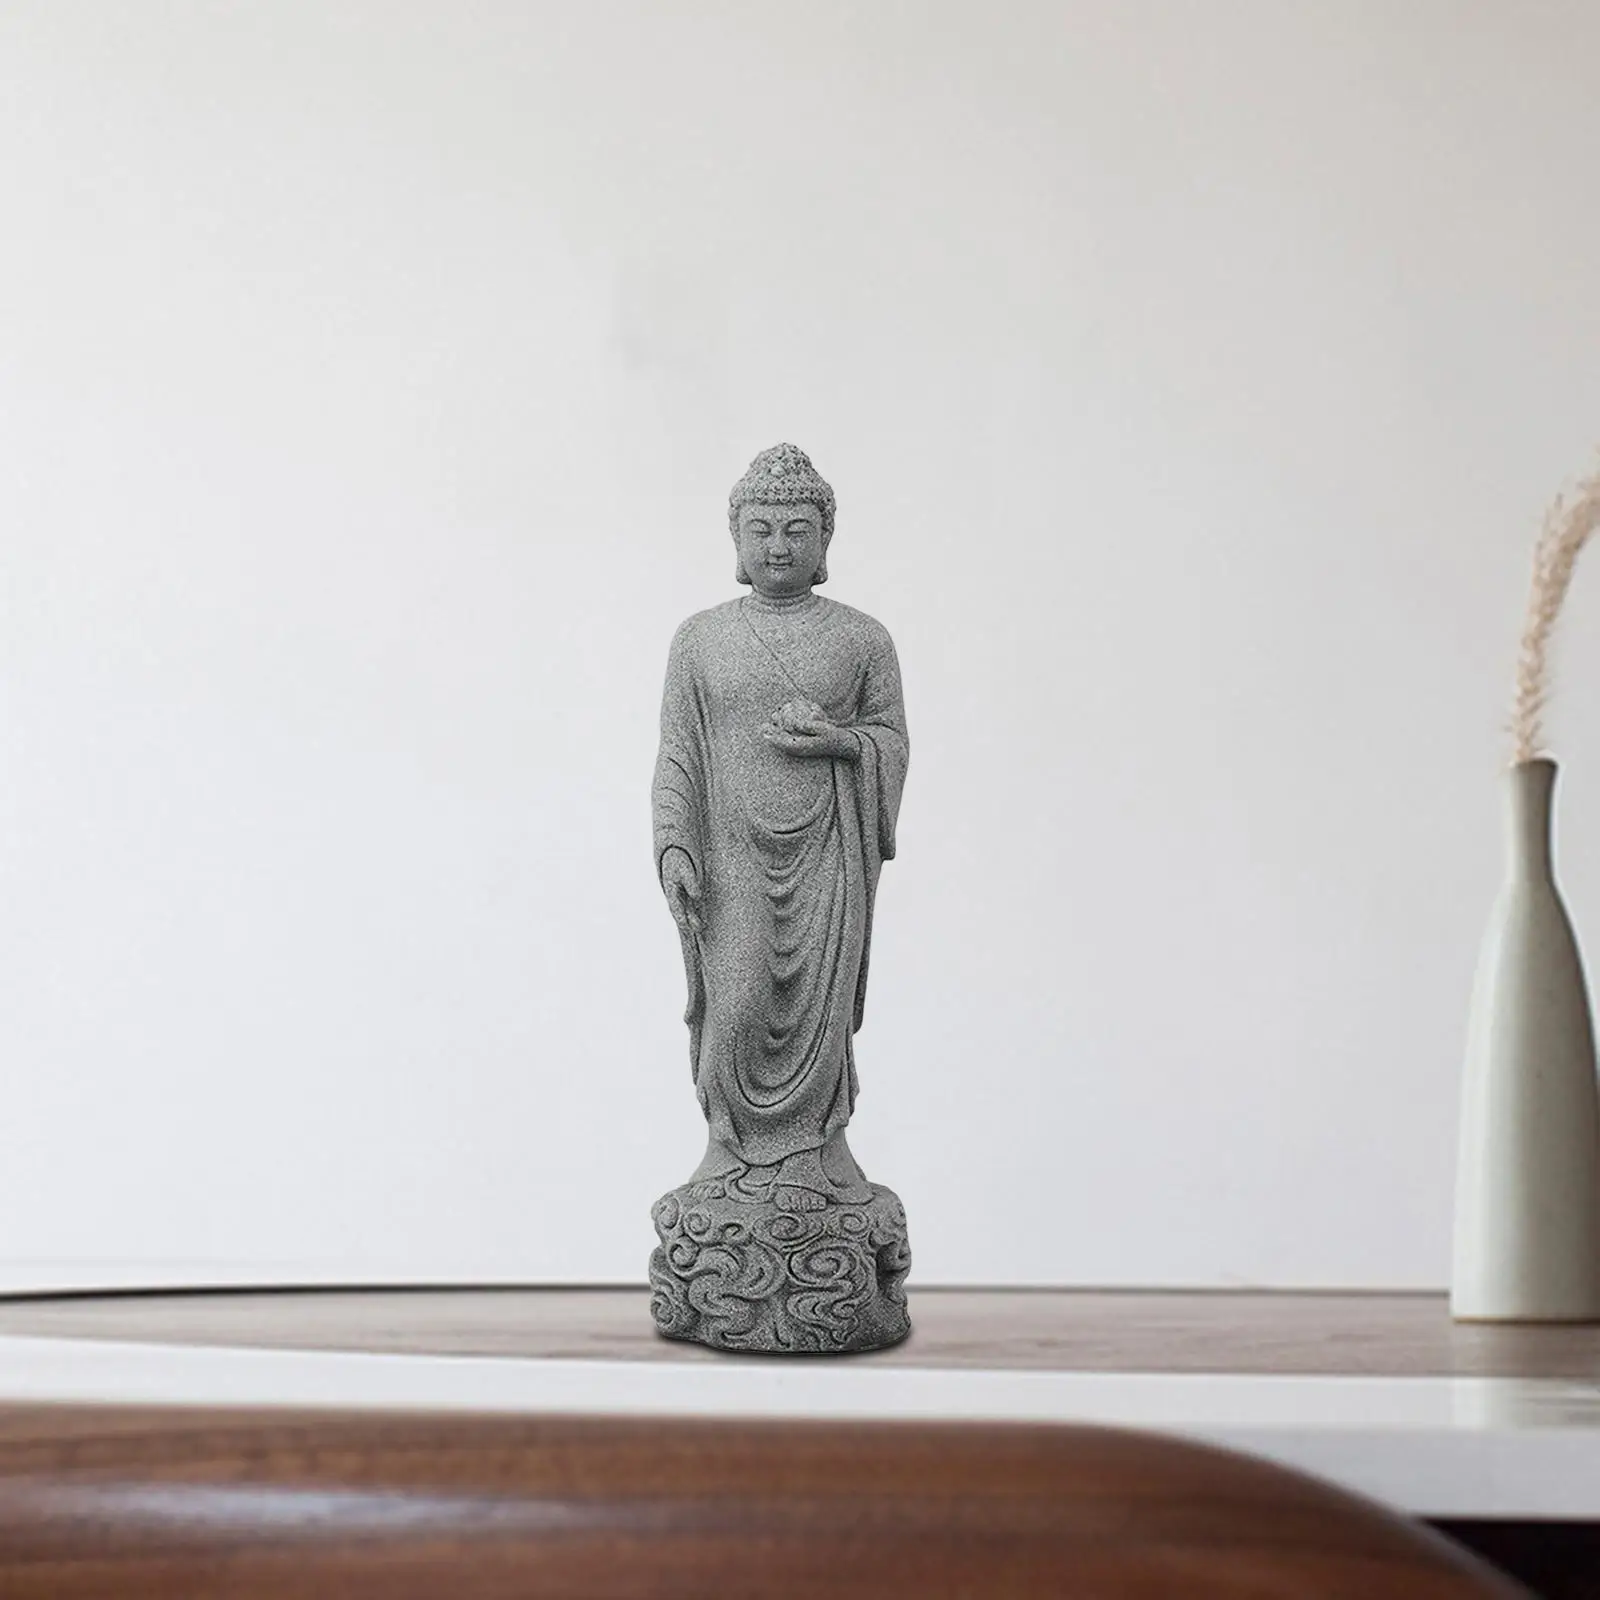 Mini Buddha Figurine Standing Craft Meditation Gift for Office Home Indoor Garden Yard